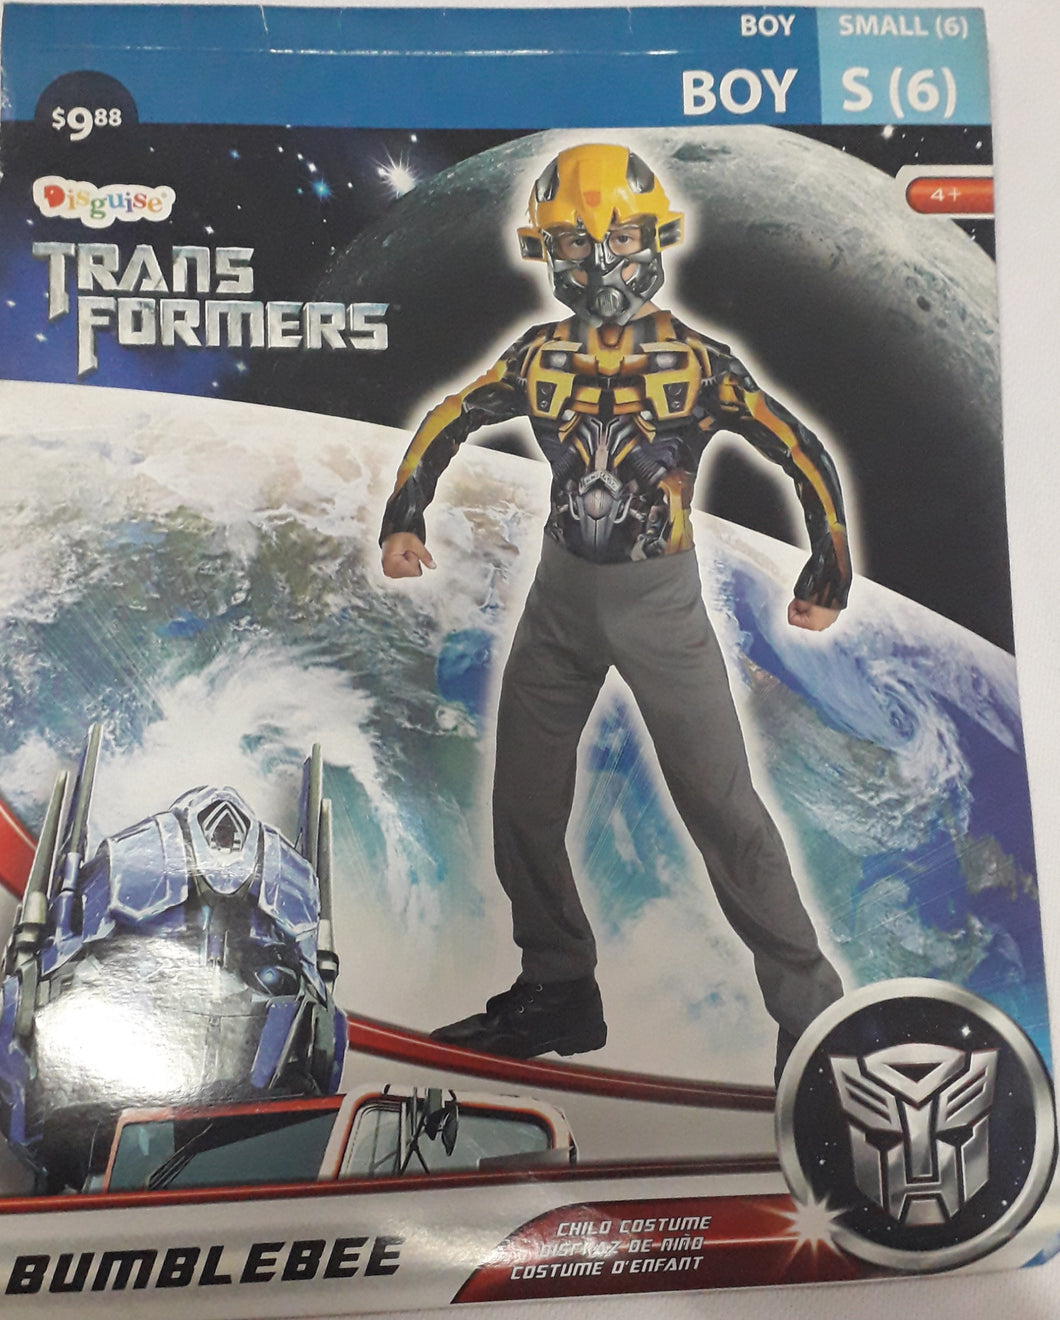 Transformers bumblebee costume for kids (5-6yo)